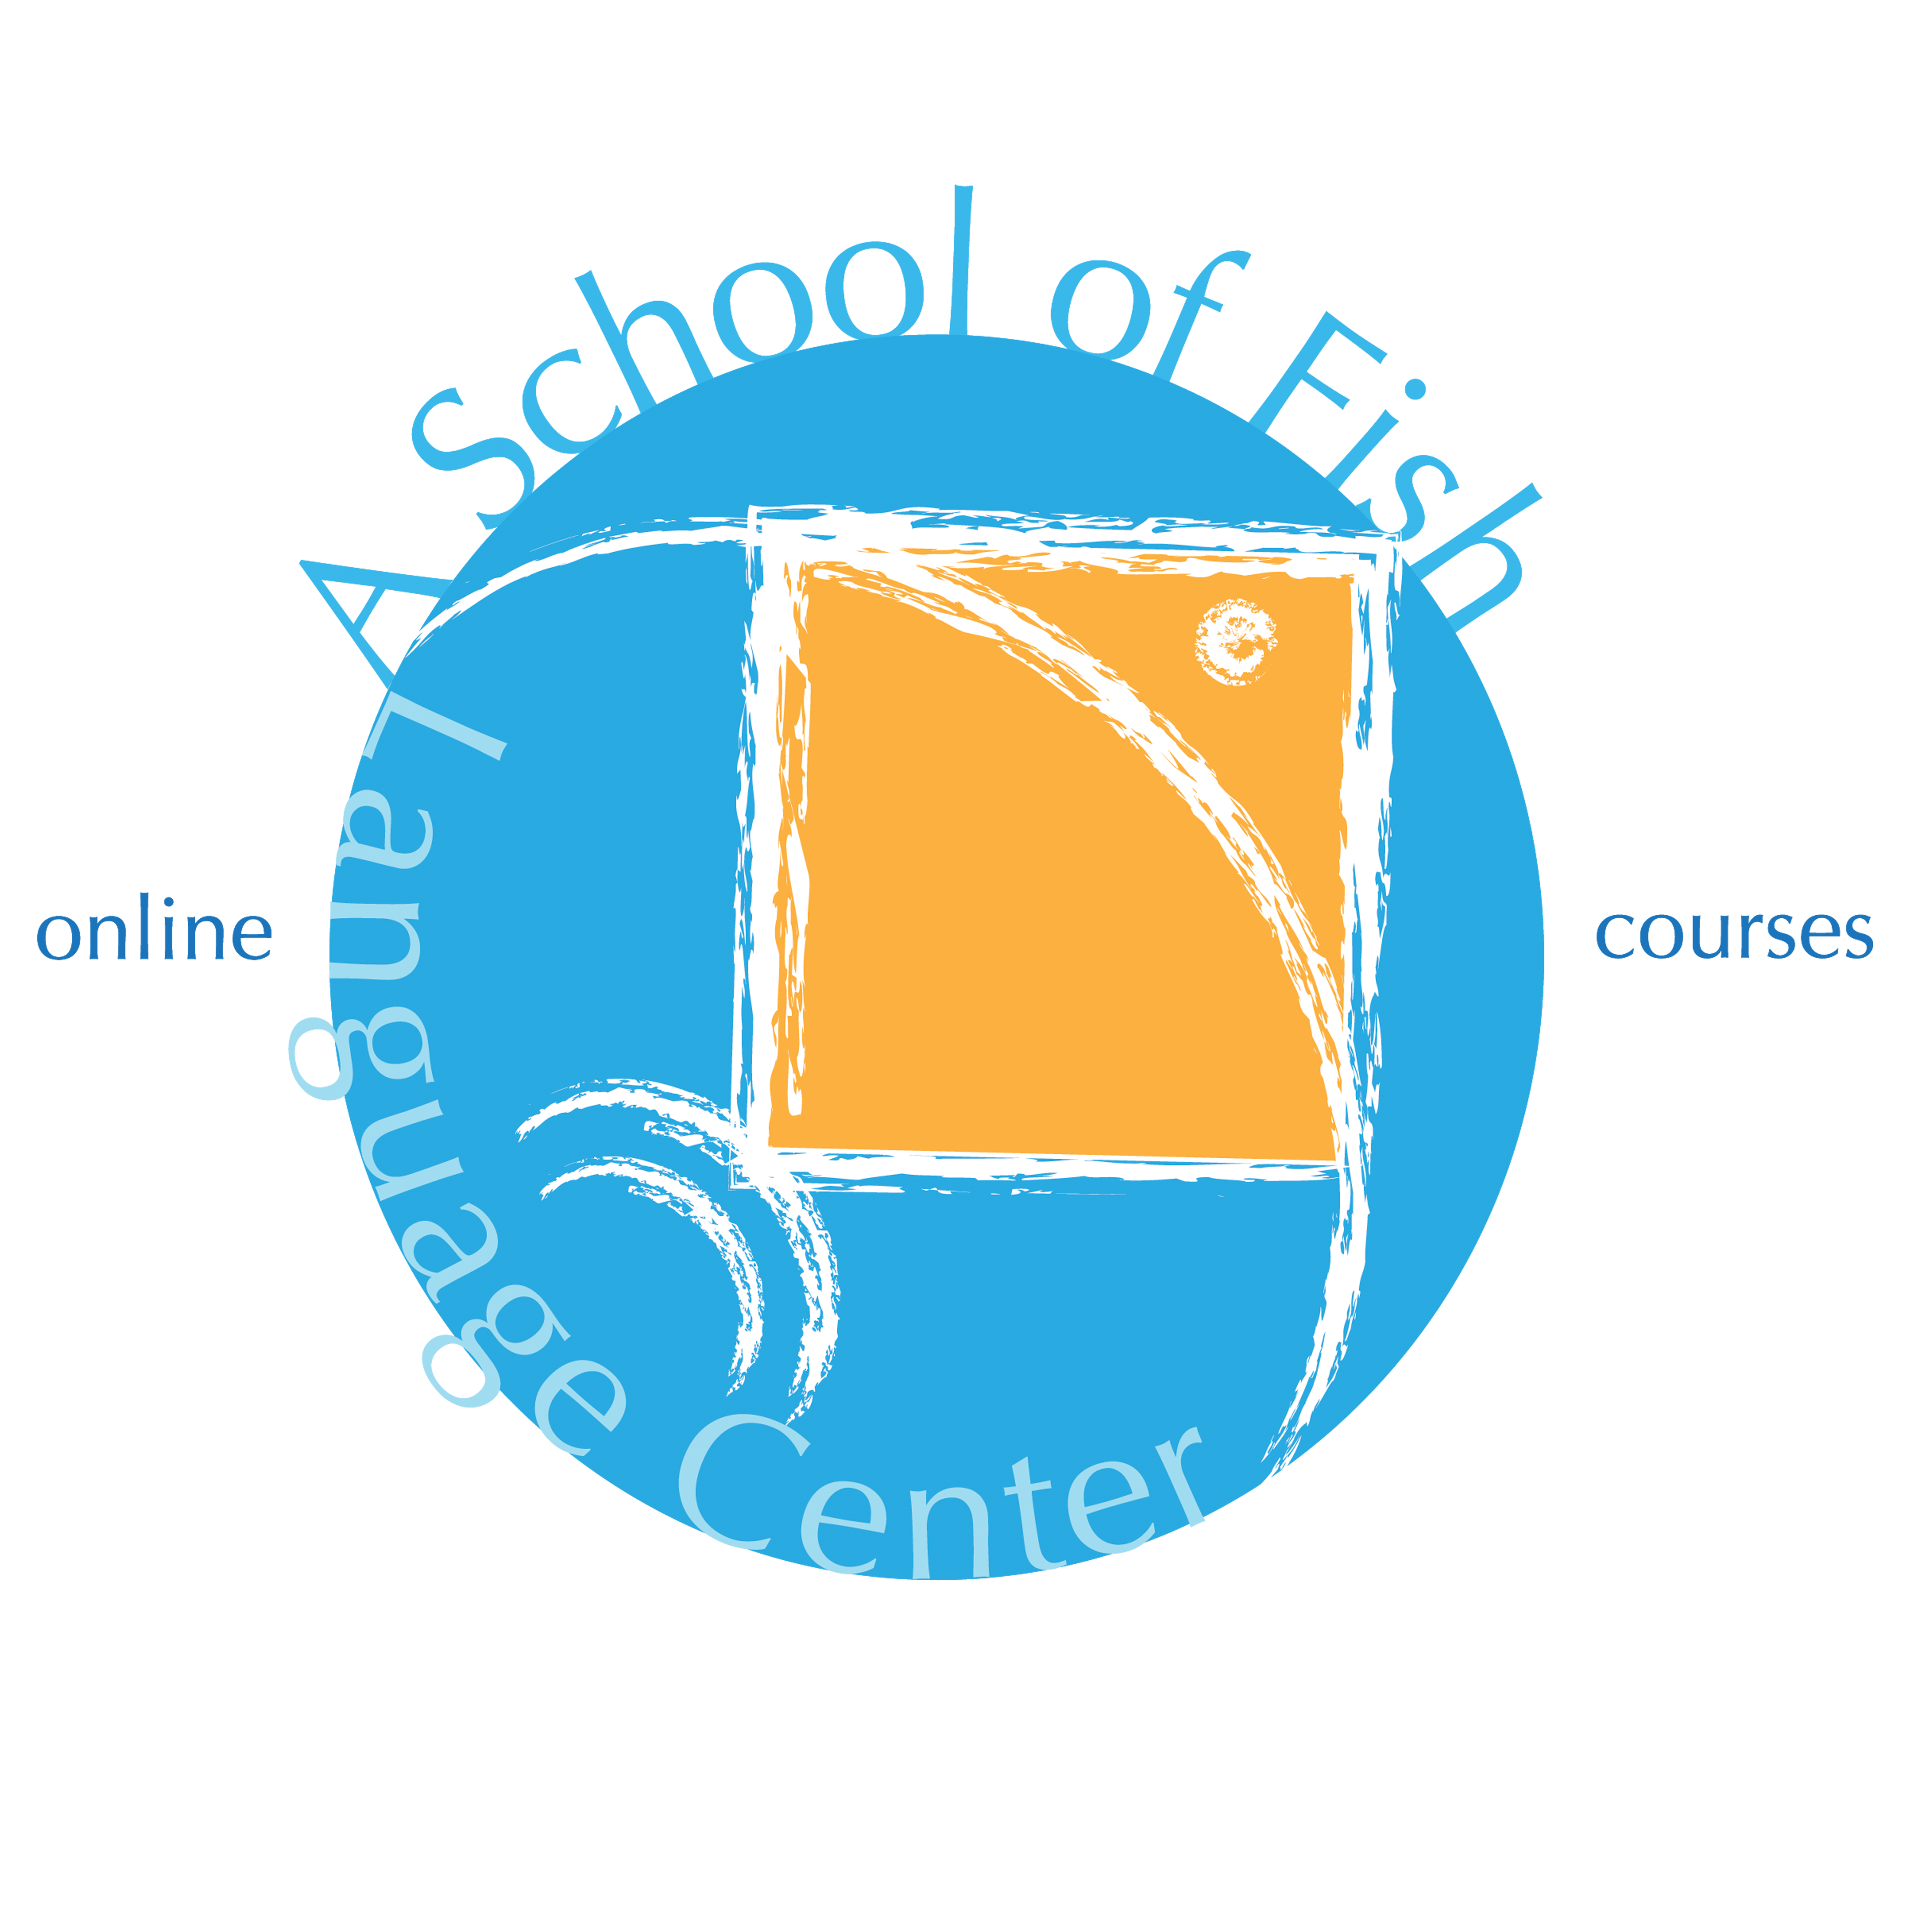 A School of Fish Language Center